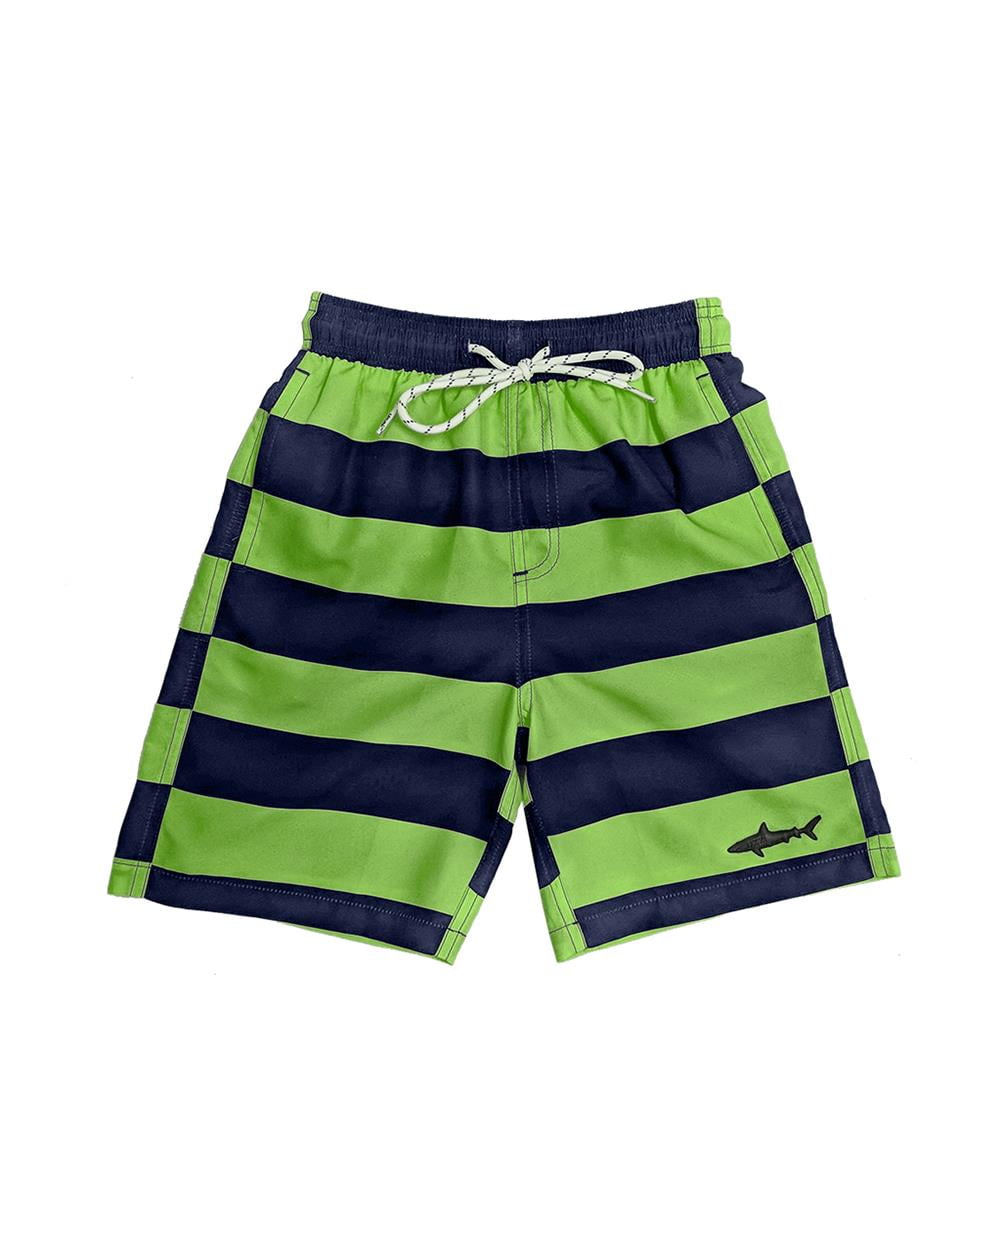 Uzzi Boys Boxer Shorts Quick Dry Swim Trunks Fun Print Boxers, Green ...